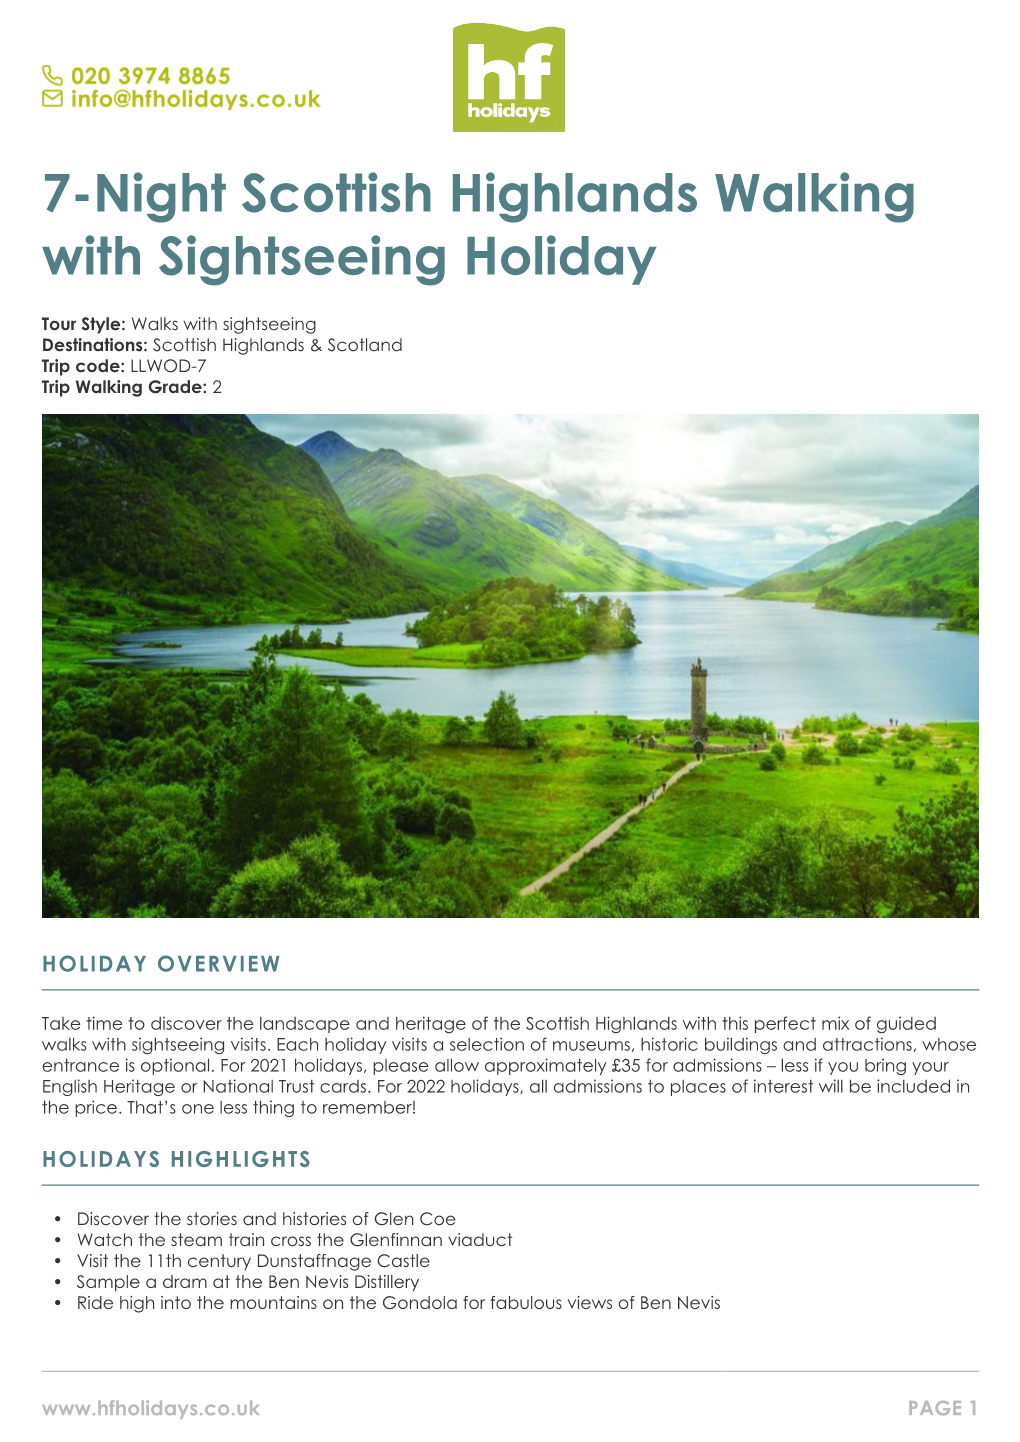 7-Night Scottish Highlands Walking with Sightseeing Holiday